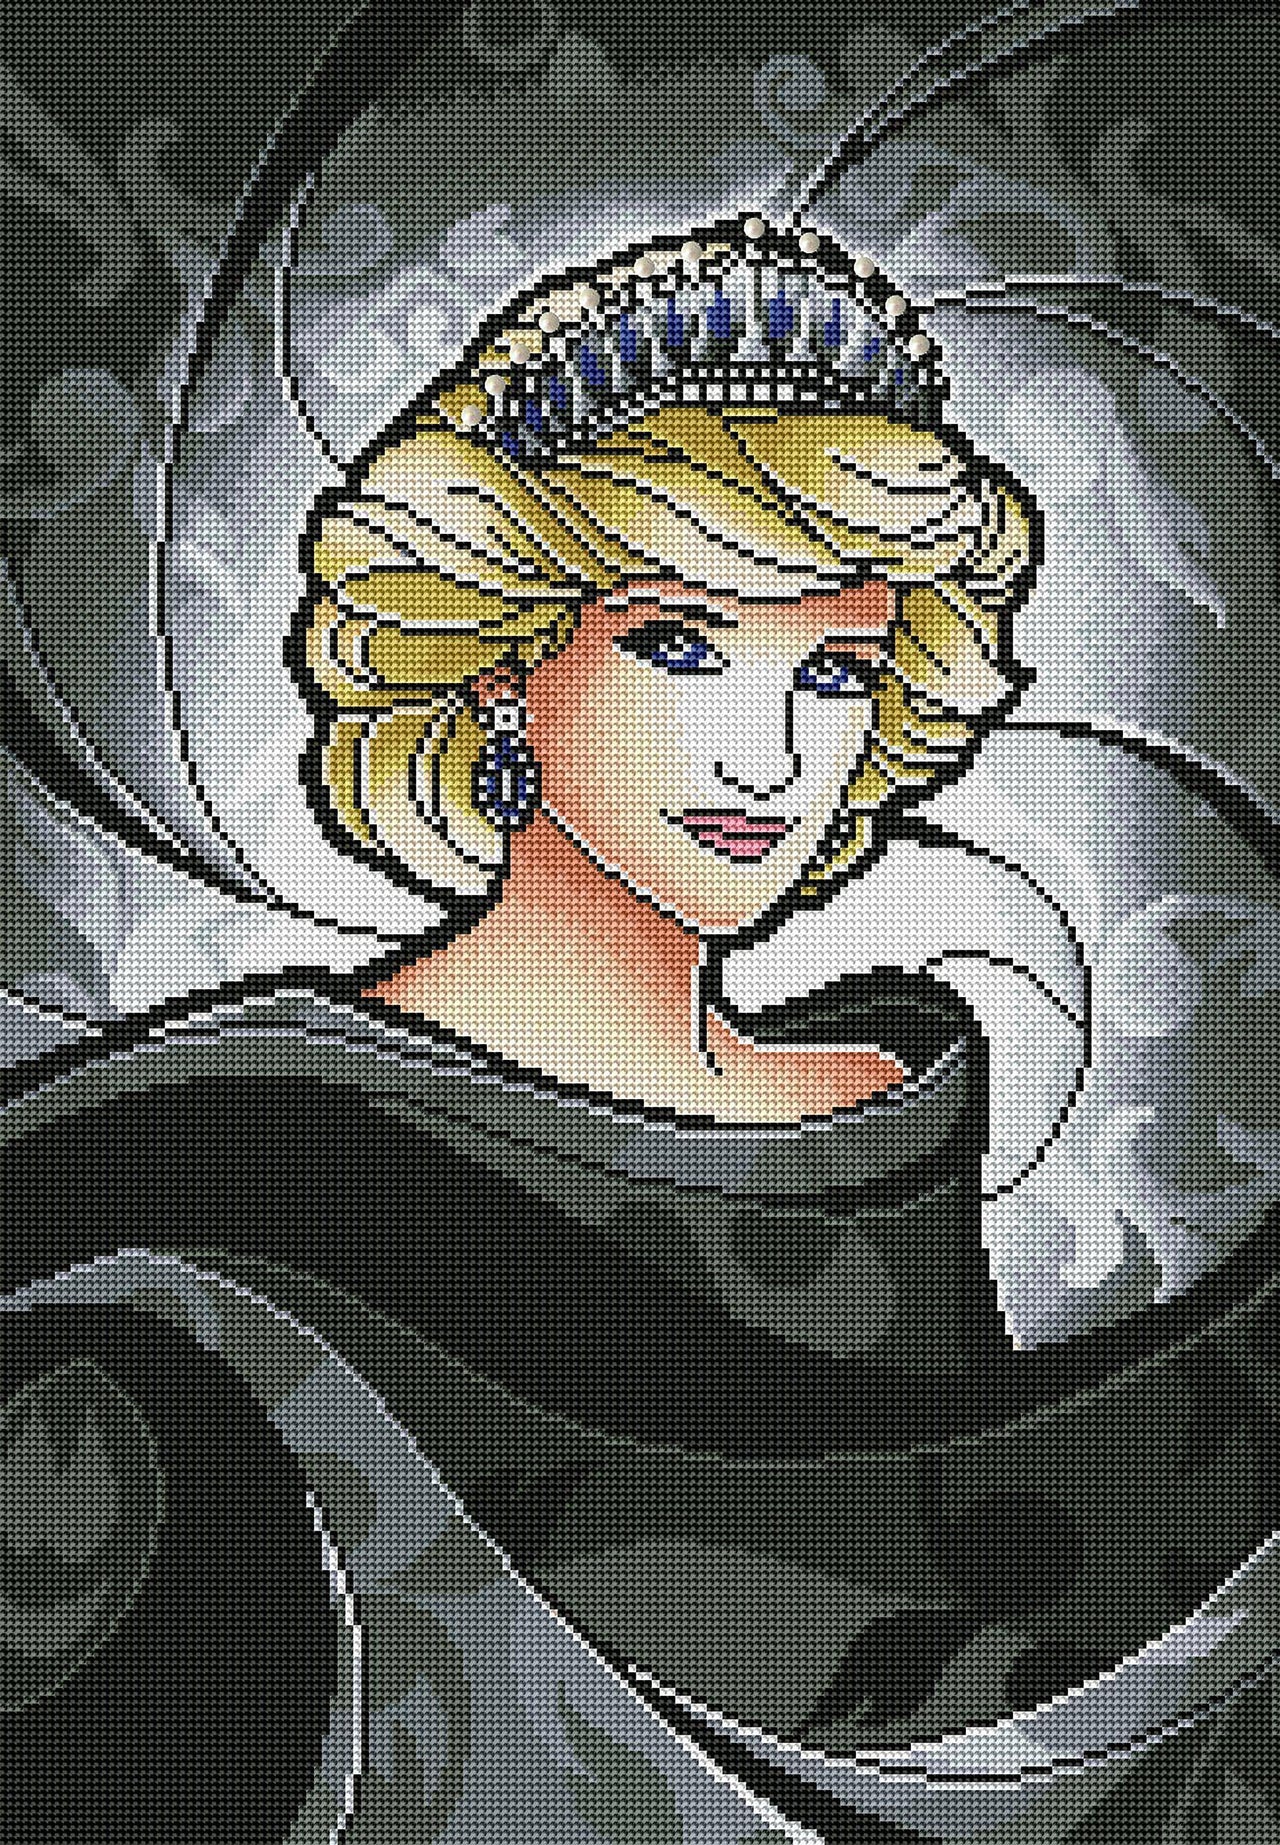 Diamond Painting Princess Diana 18" x 26″ (46cm x 66cm) / Round with 27 Colors including 1 AB and 1 Special Diamond / 38,844